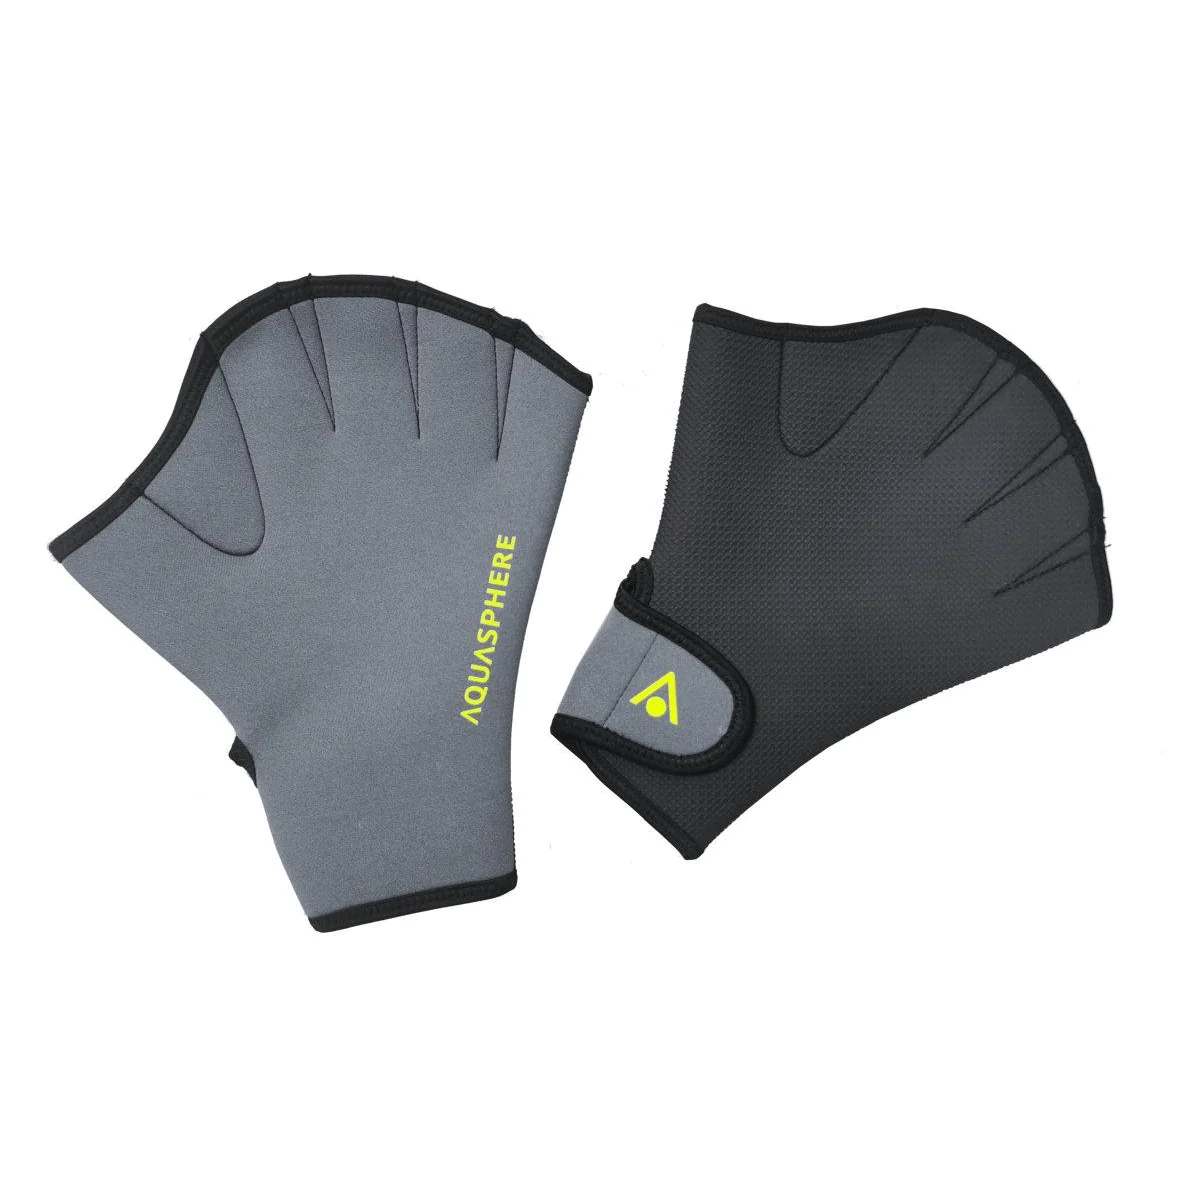 Aqua Fitness Gloves